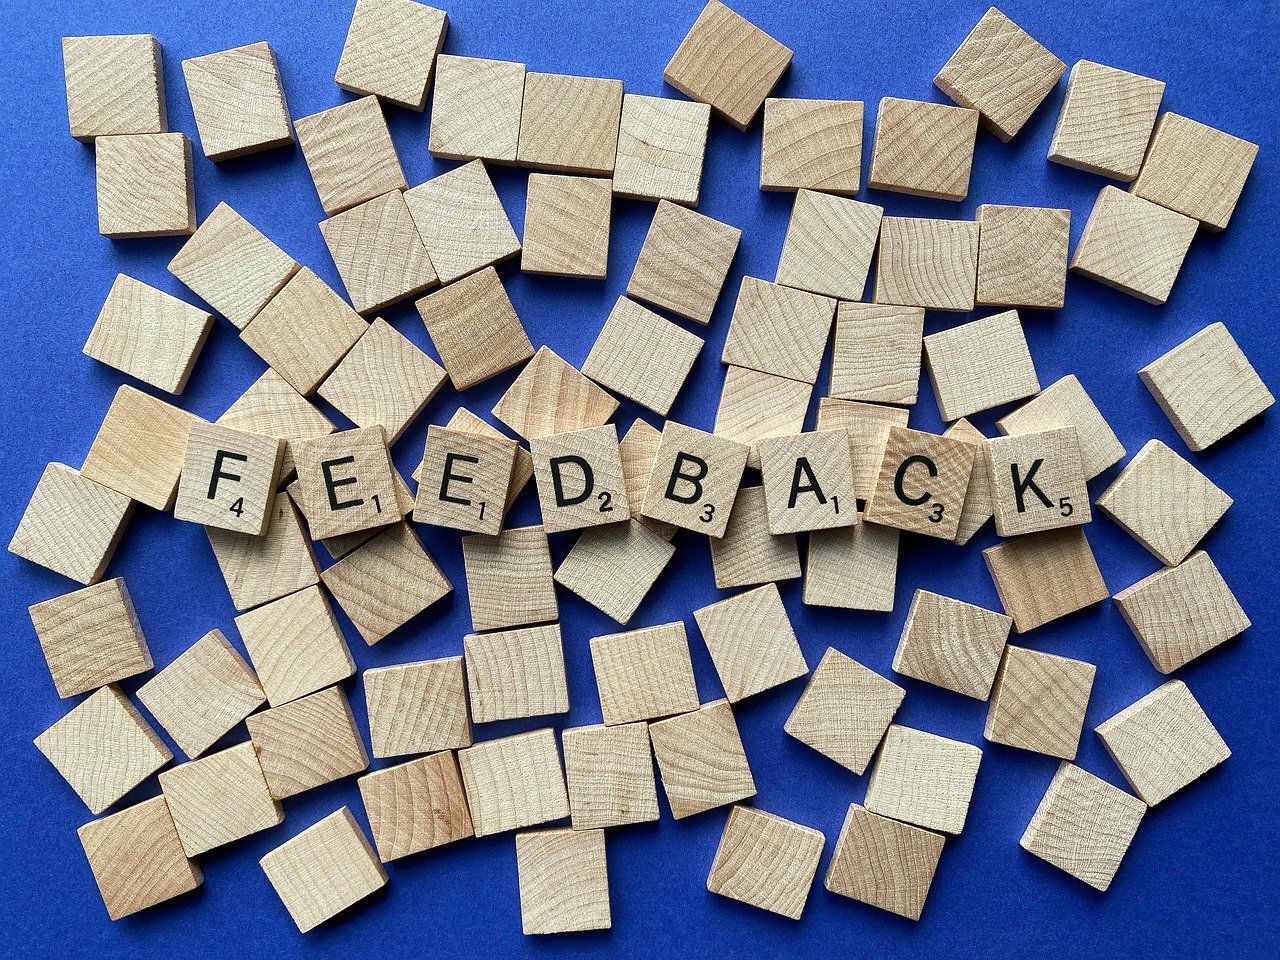 15 Customer Feedback Examples Of Companies Using Feedback To Their Advantage